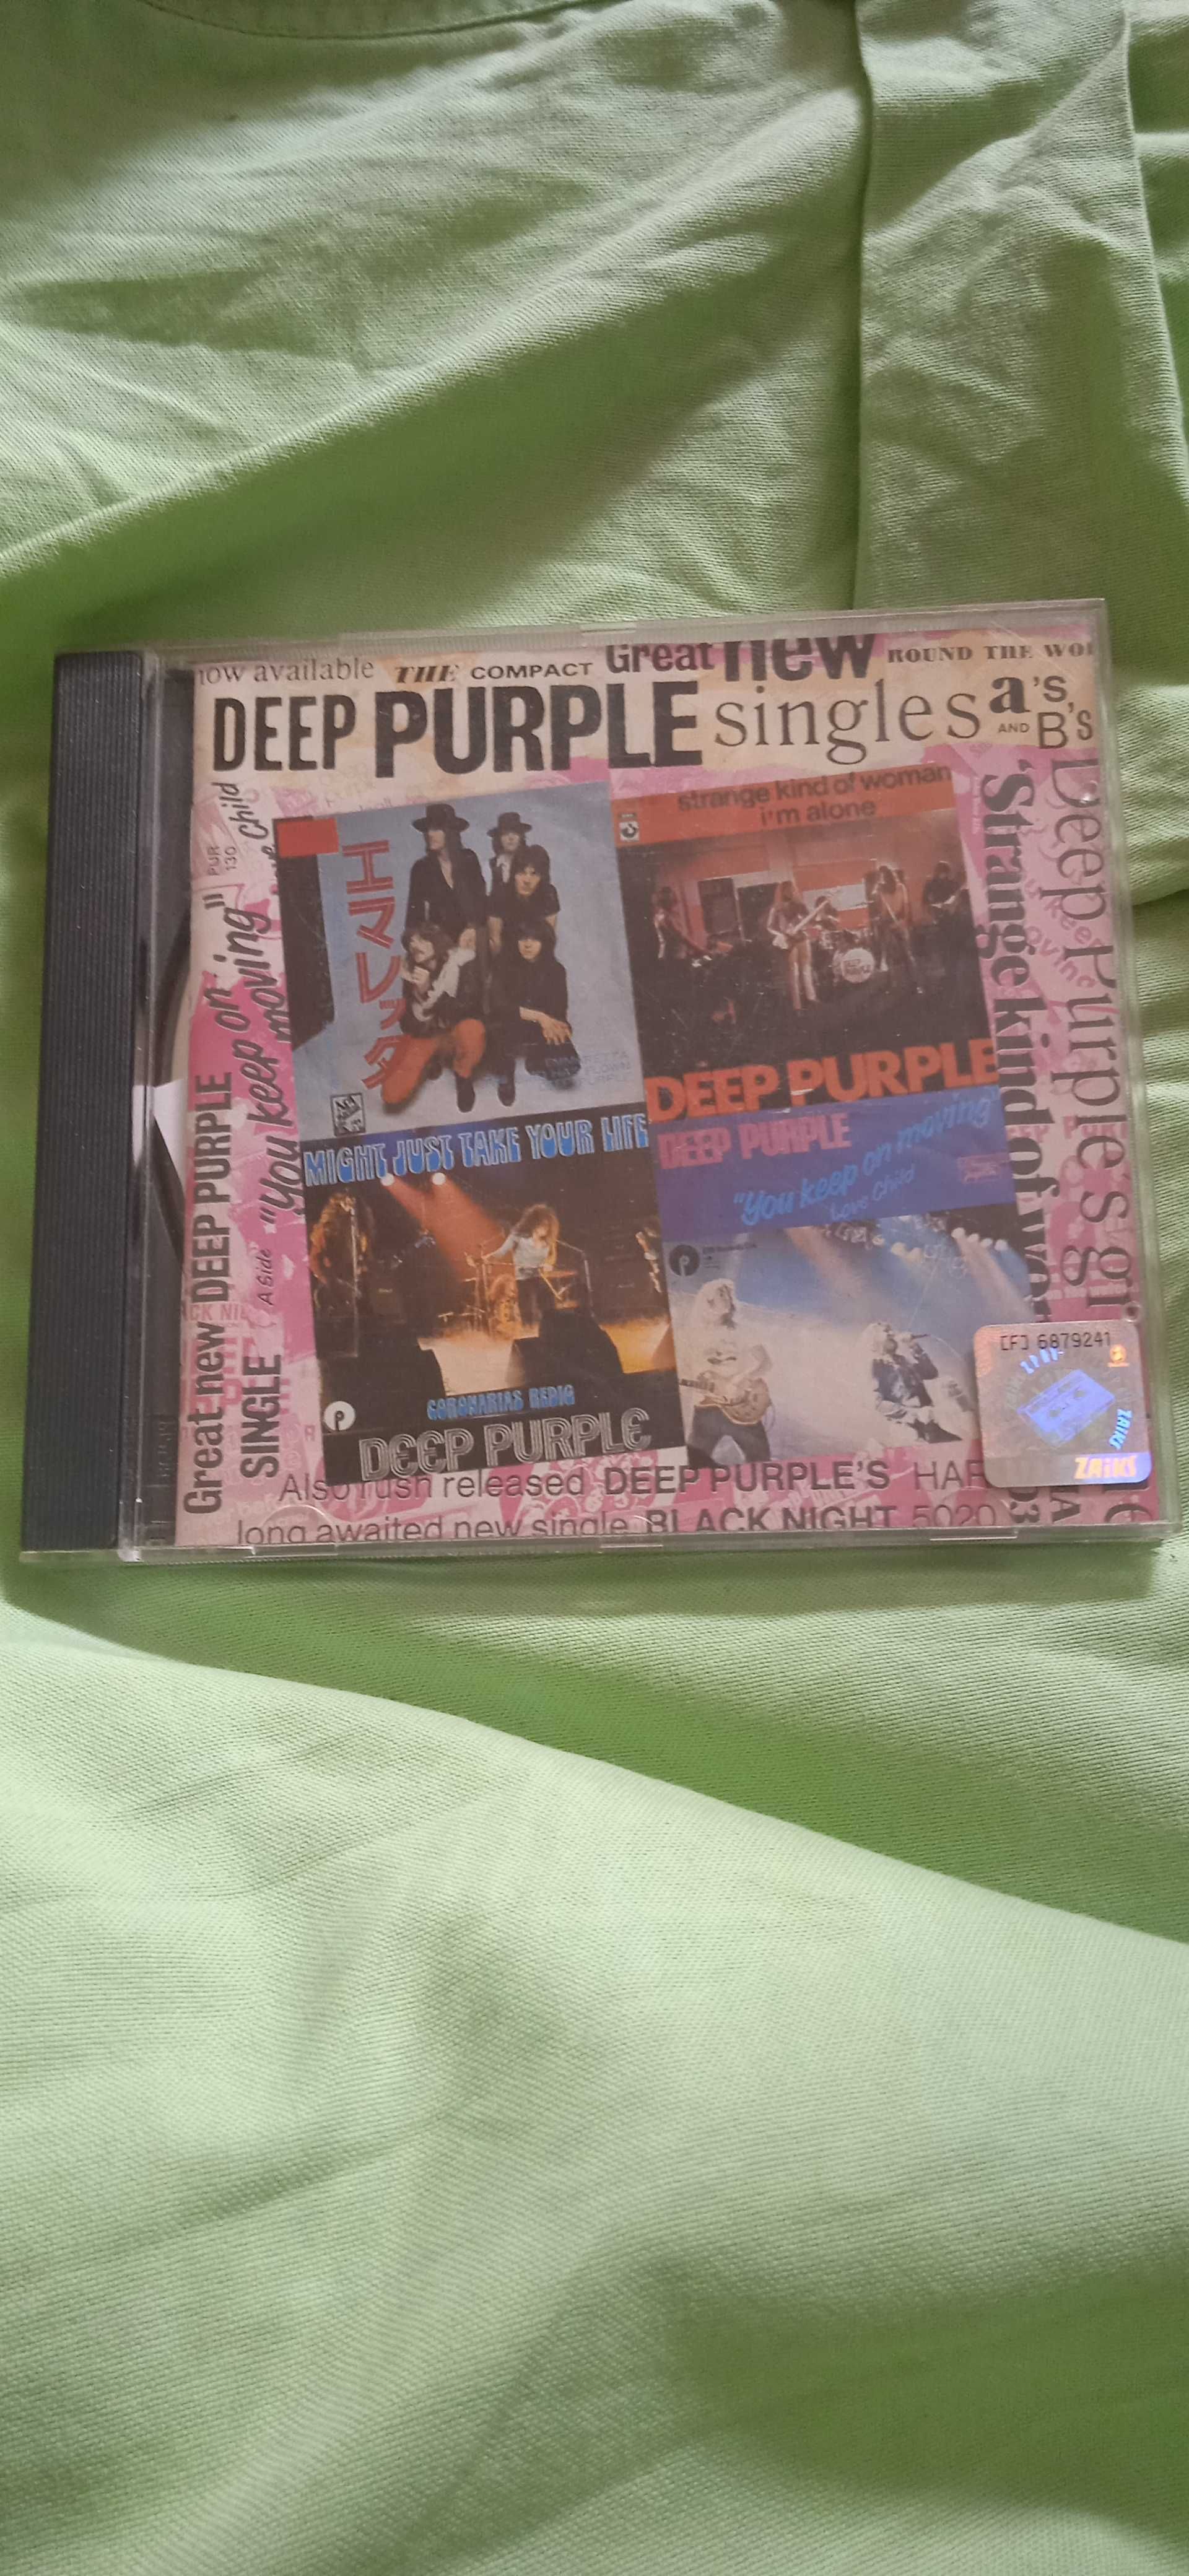 Deep Purple - Great new singles